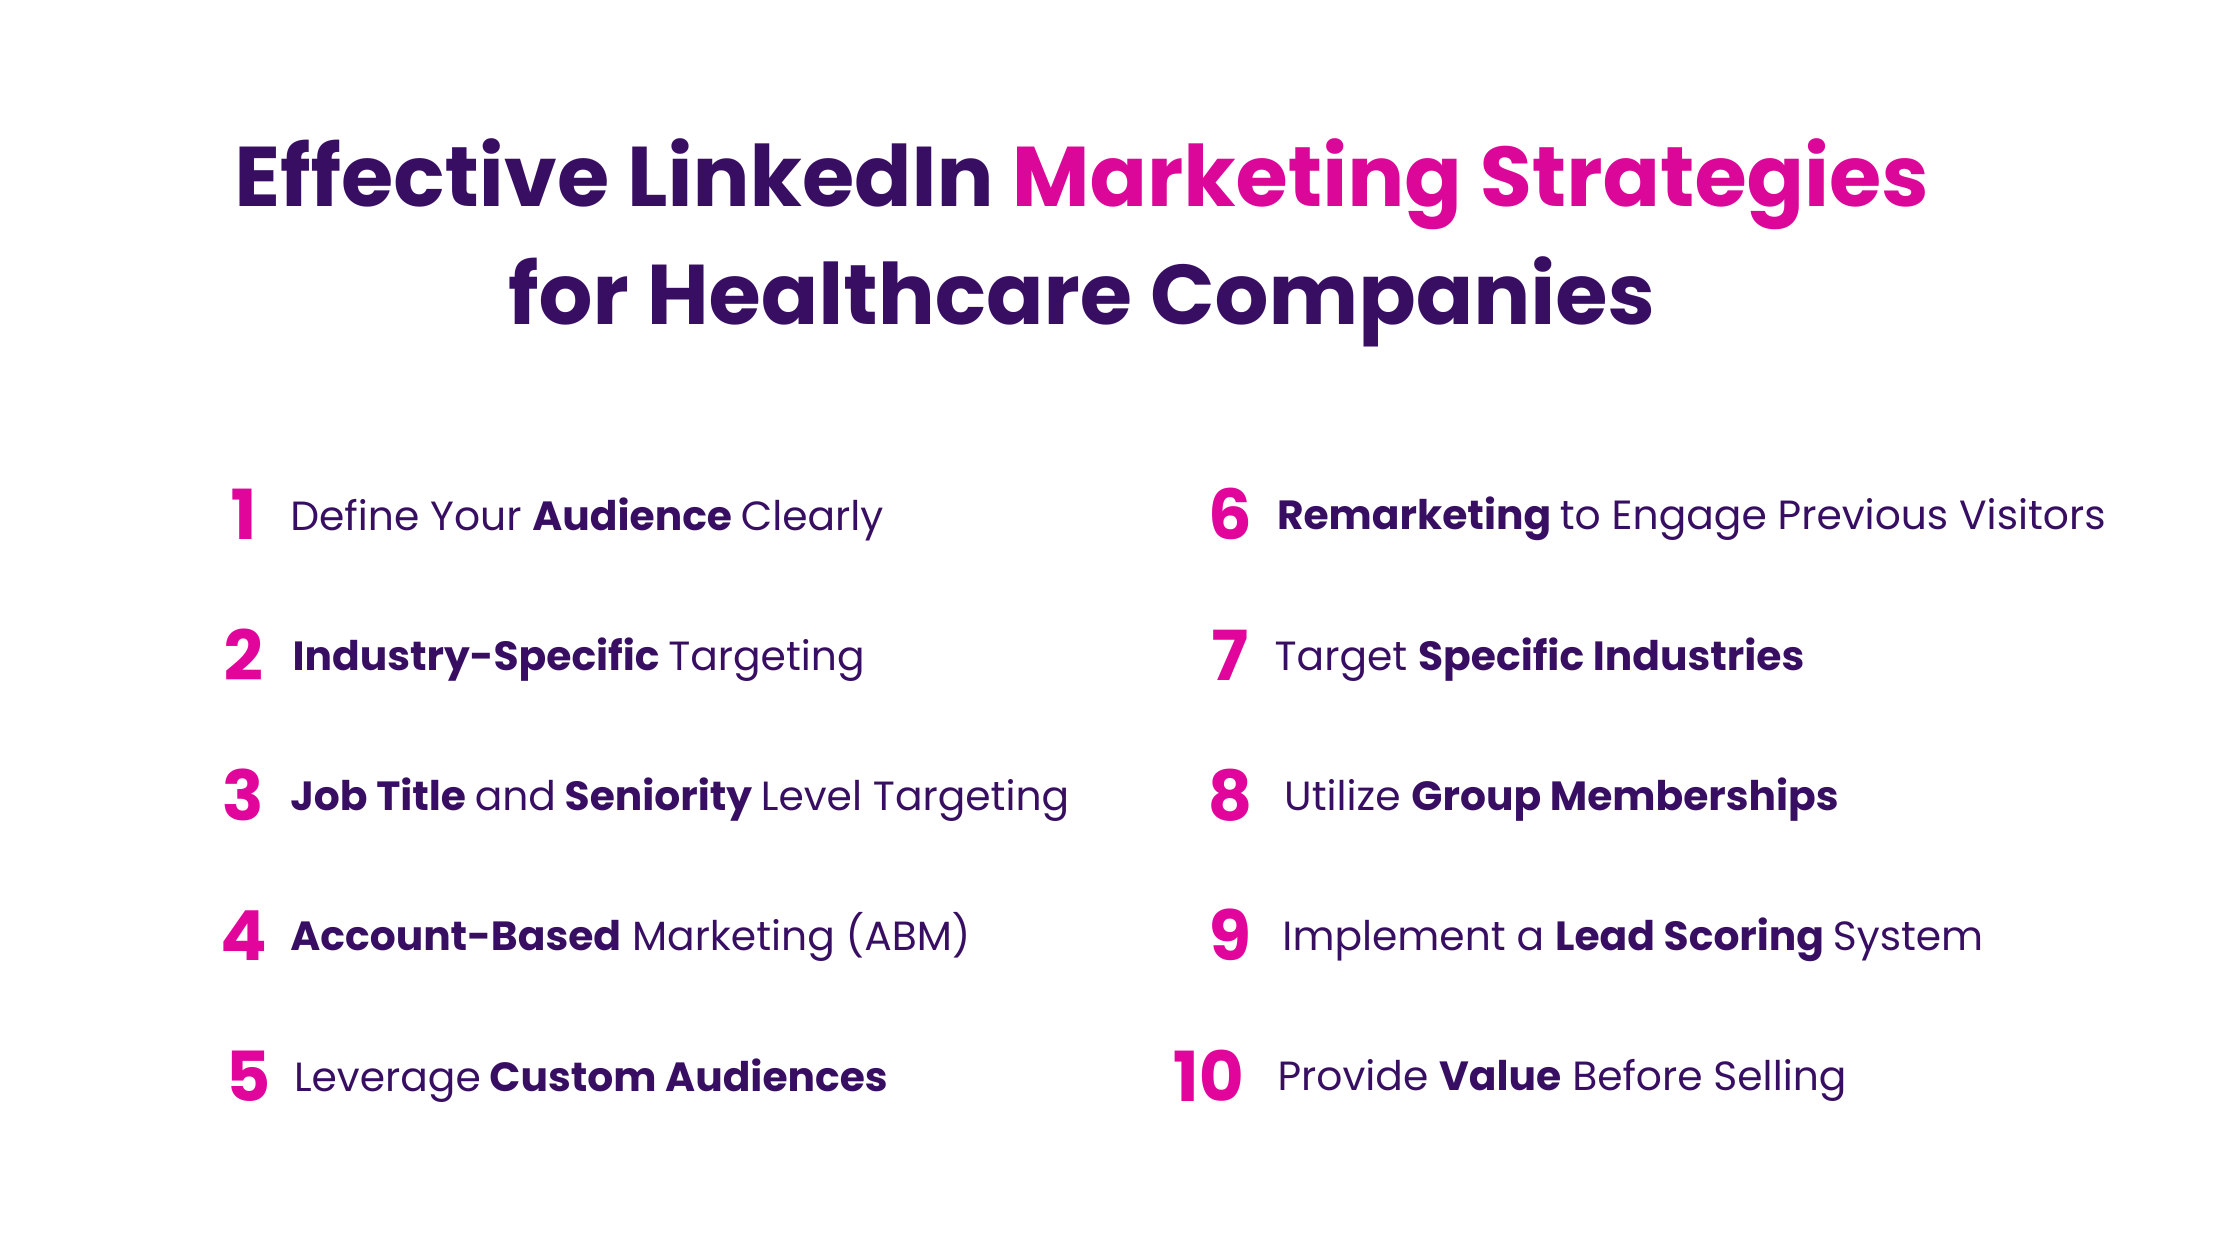 Effective LinkedIn Marketing Strategies for Healthcare Companies